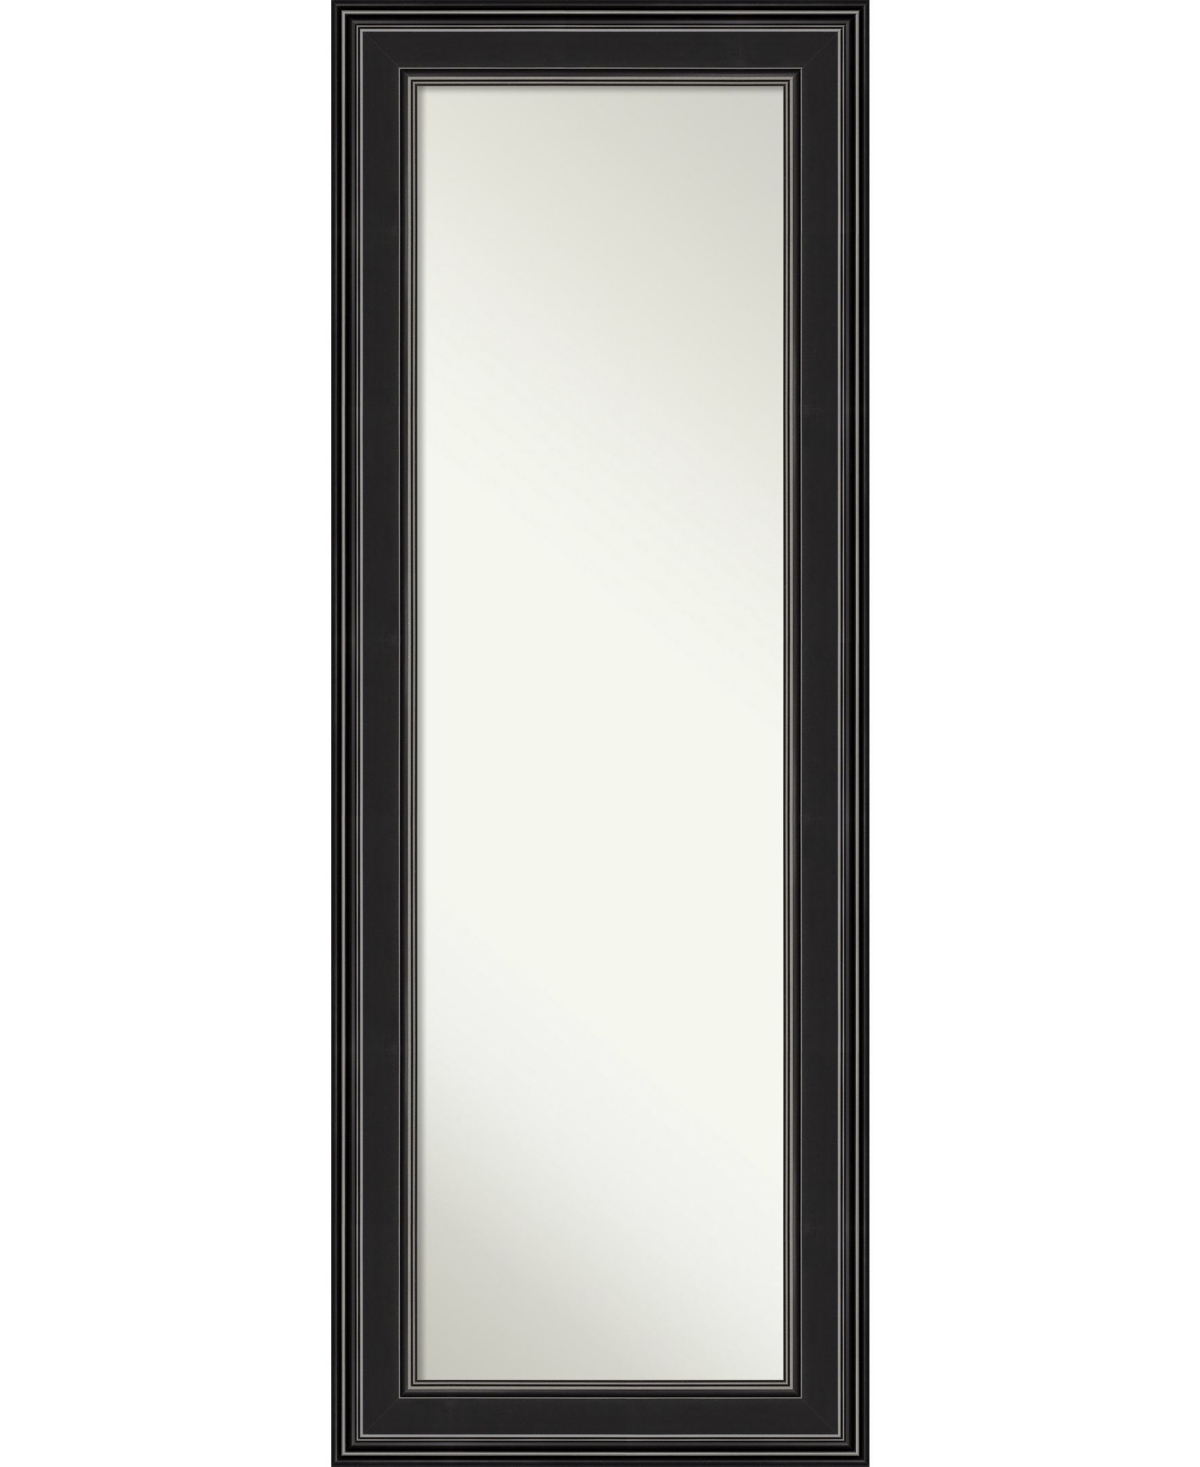 Ridge on The Door Full Length Mirror, 19.75" x 53.75" - Black